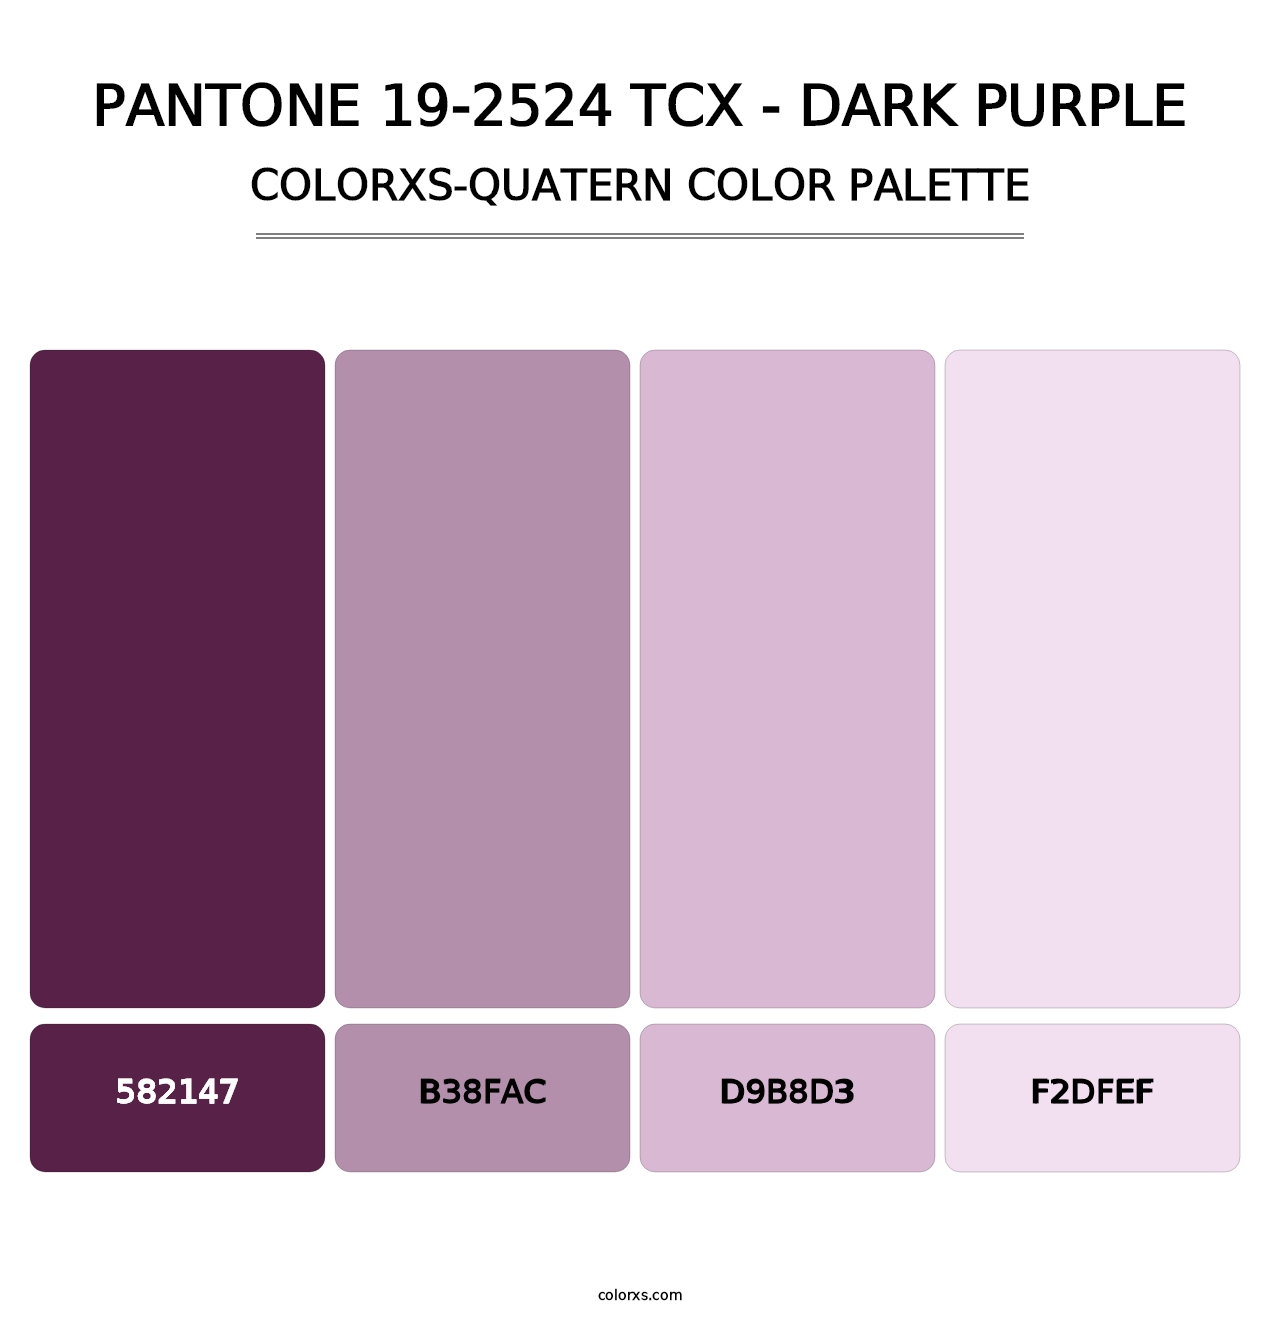 PANTONE 19-2524 TCX - Dark Purple - Colorxs Quatern Palette